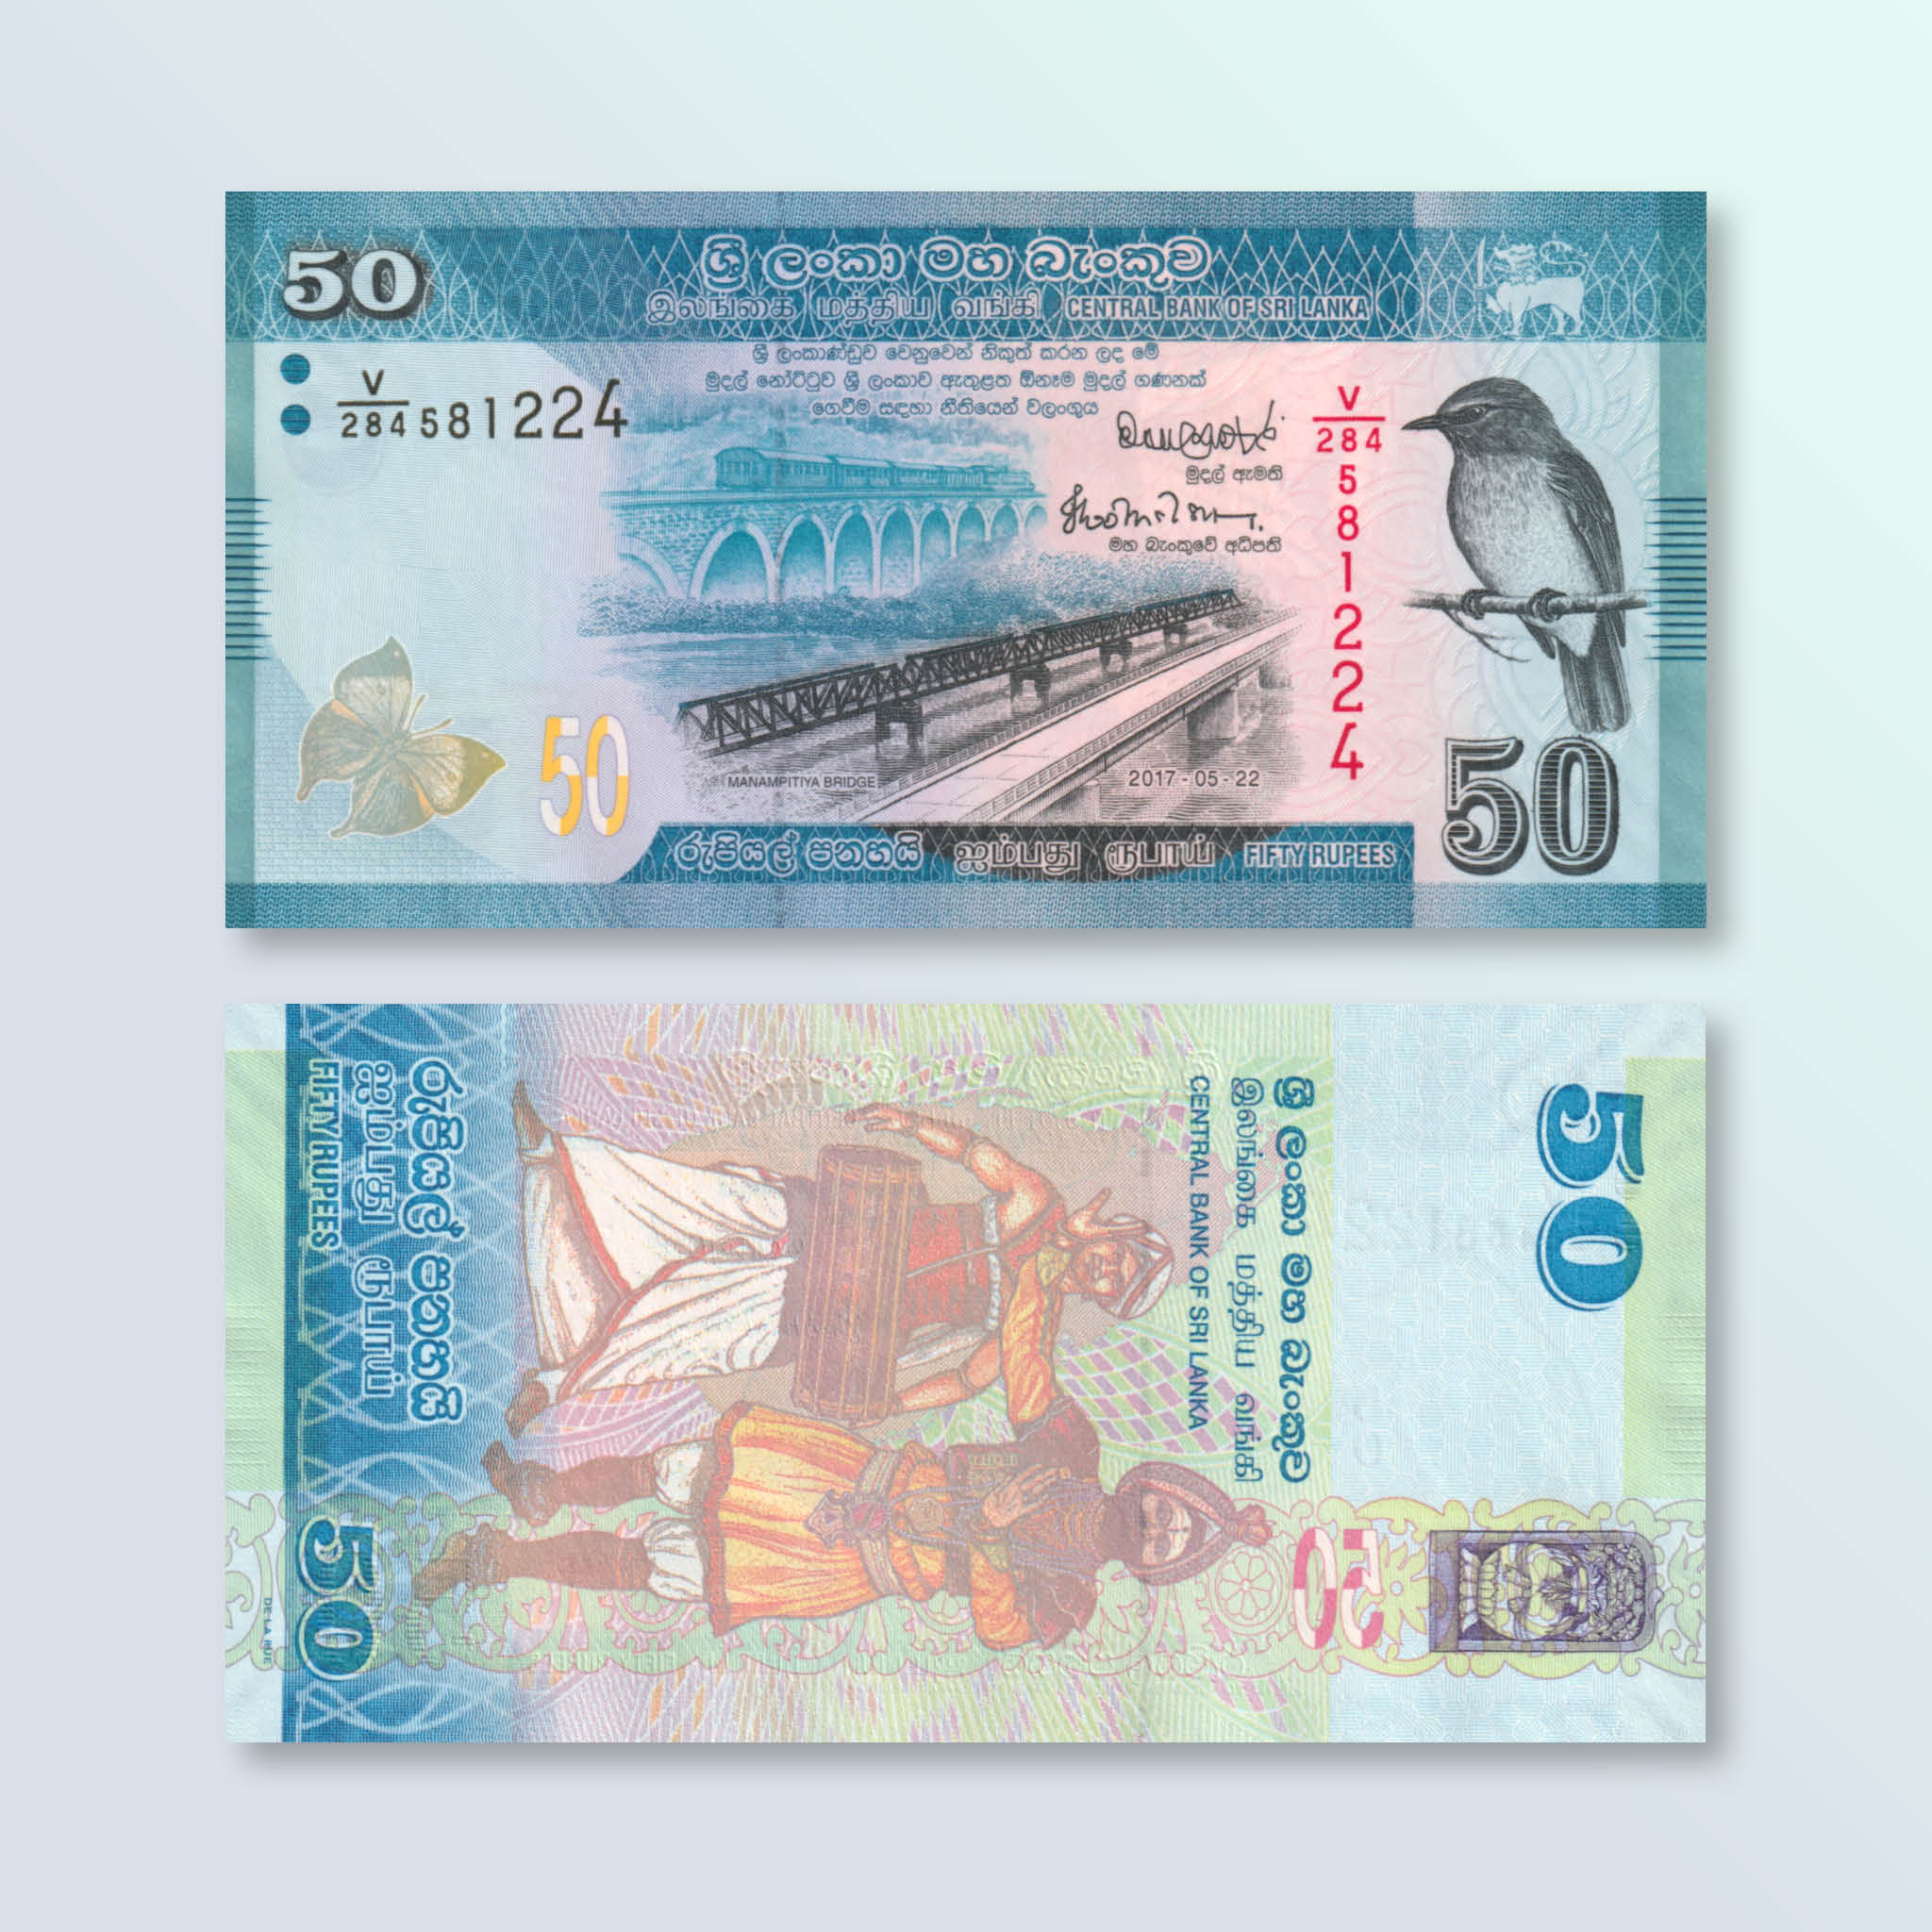 Sri Lanka 50 Rupees, 2016, B124c, P124d, UNC - Robert's World Money - World Banknotes